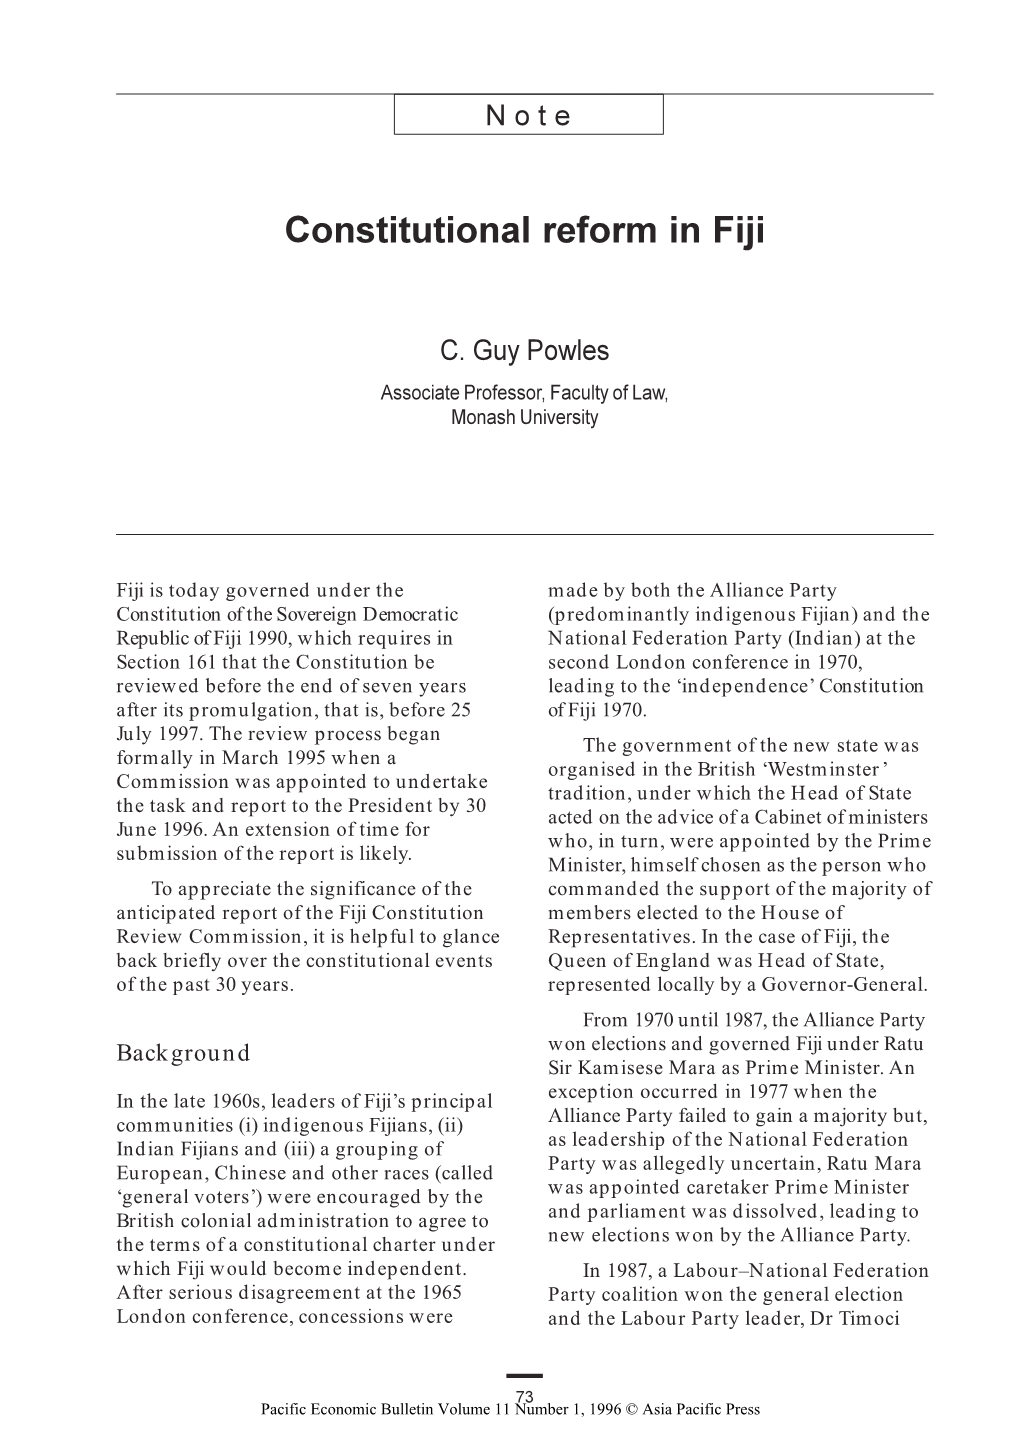 Constitutional Reform in Fiji